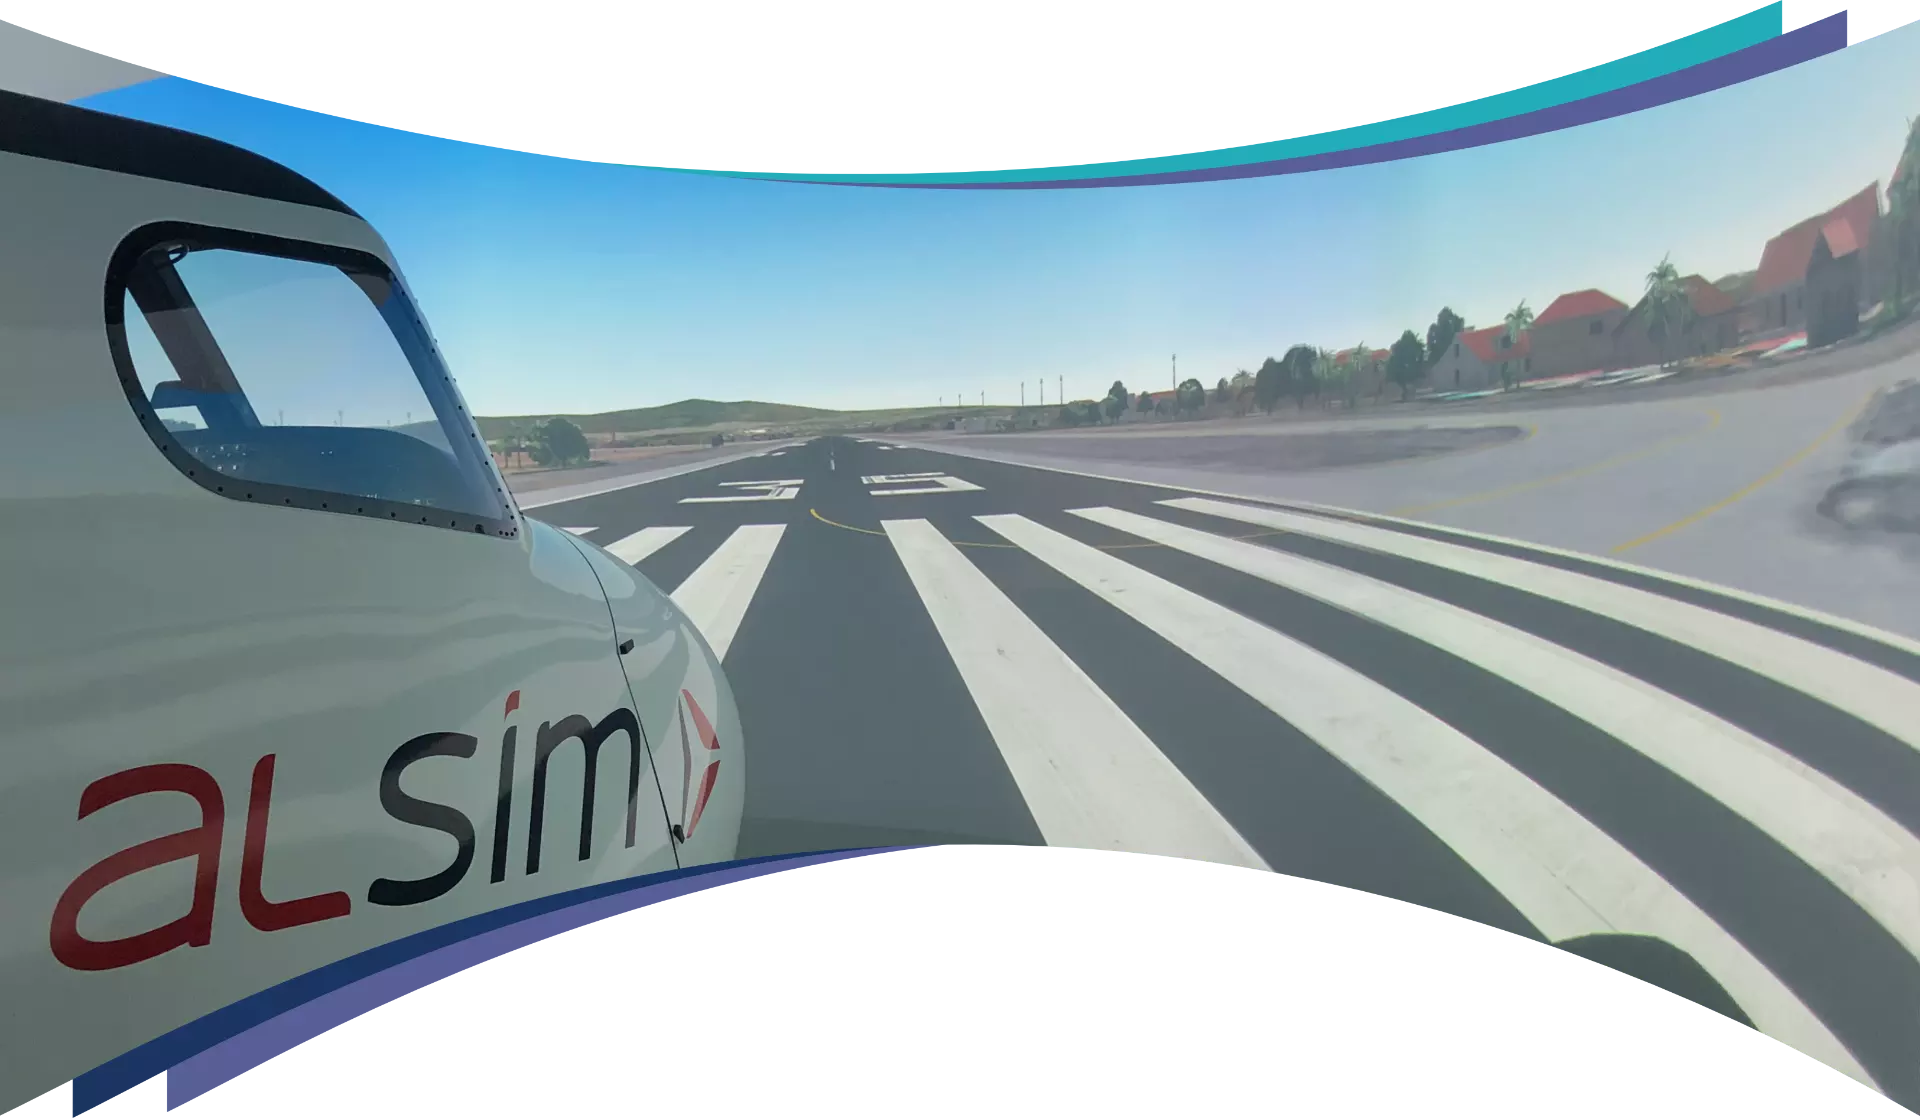 AlSim : IFA's aircraft simulator